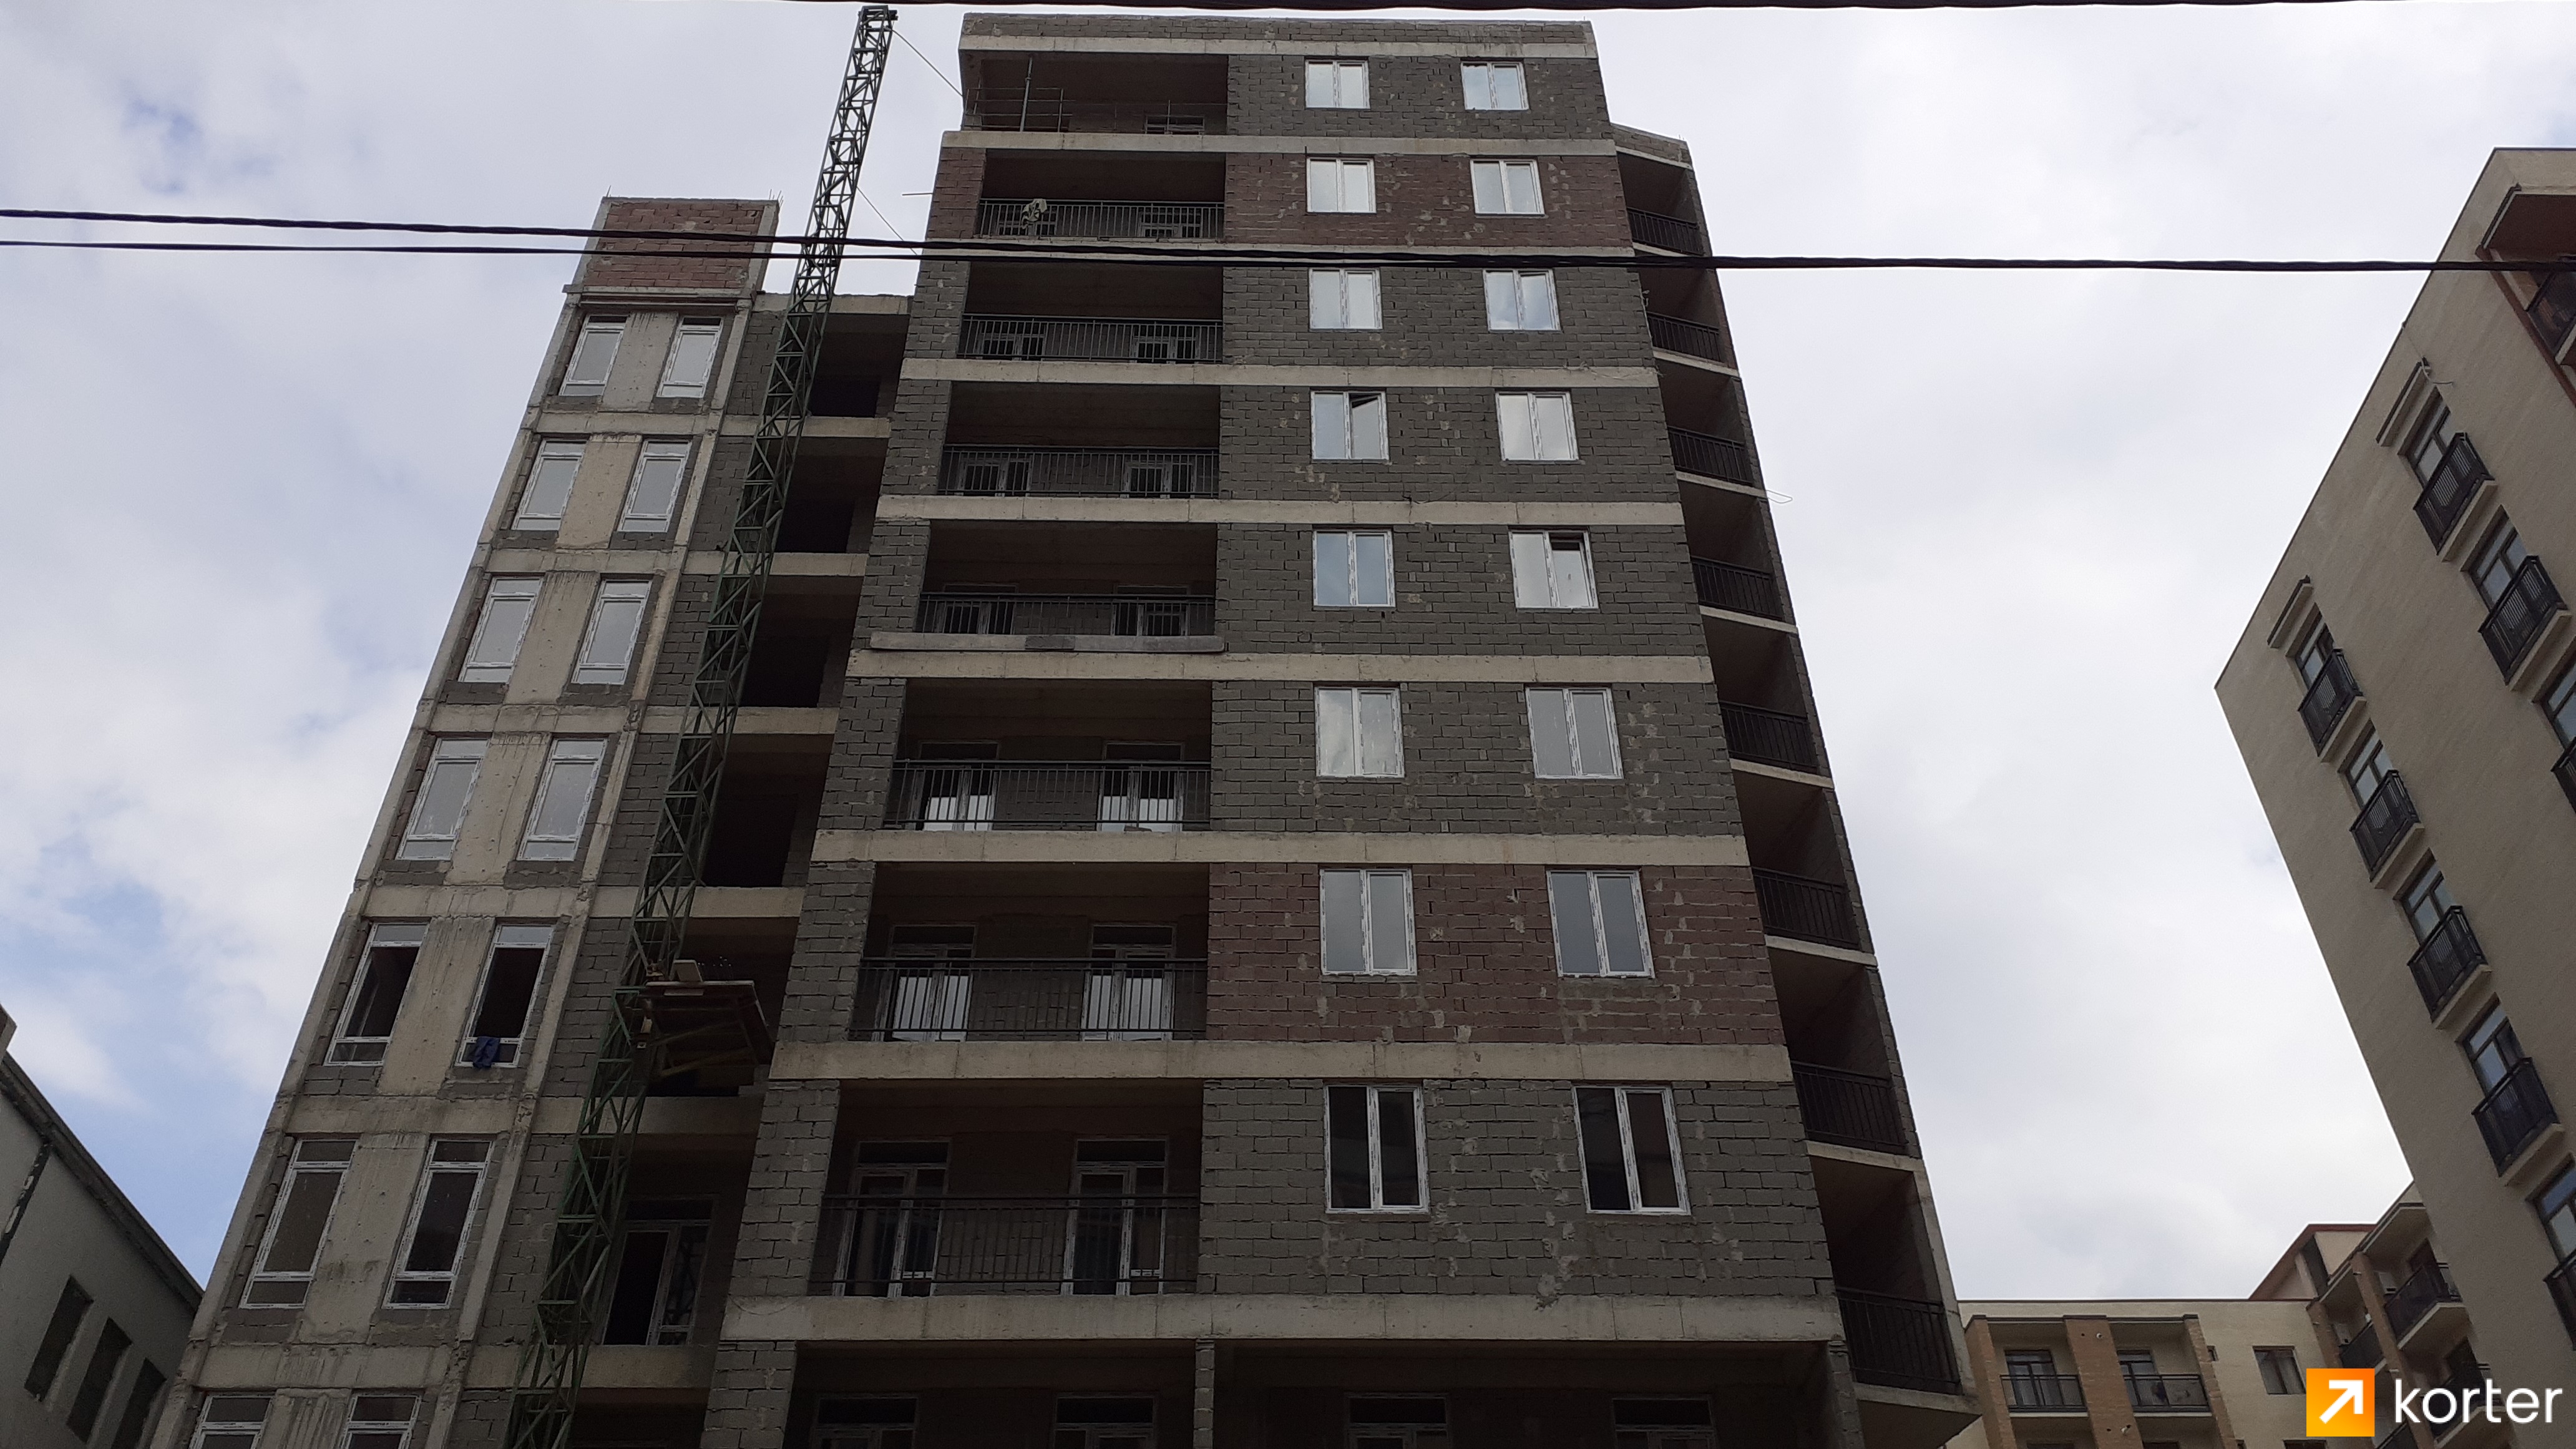 Construction progress House on Vefkhistkaosani 40 - Angle 5, September 2019